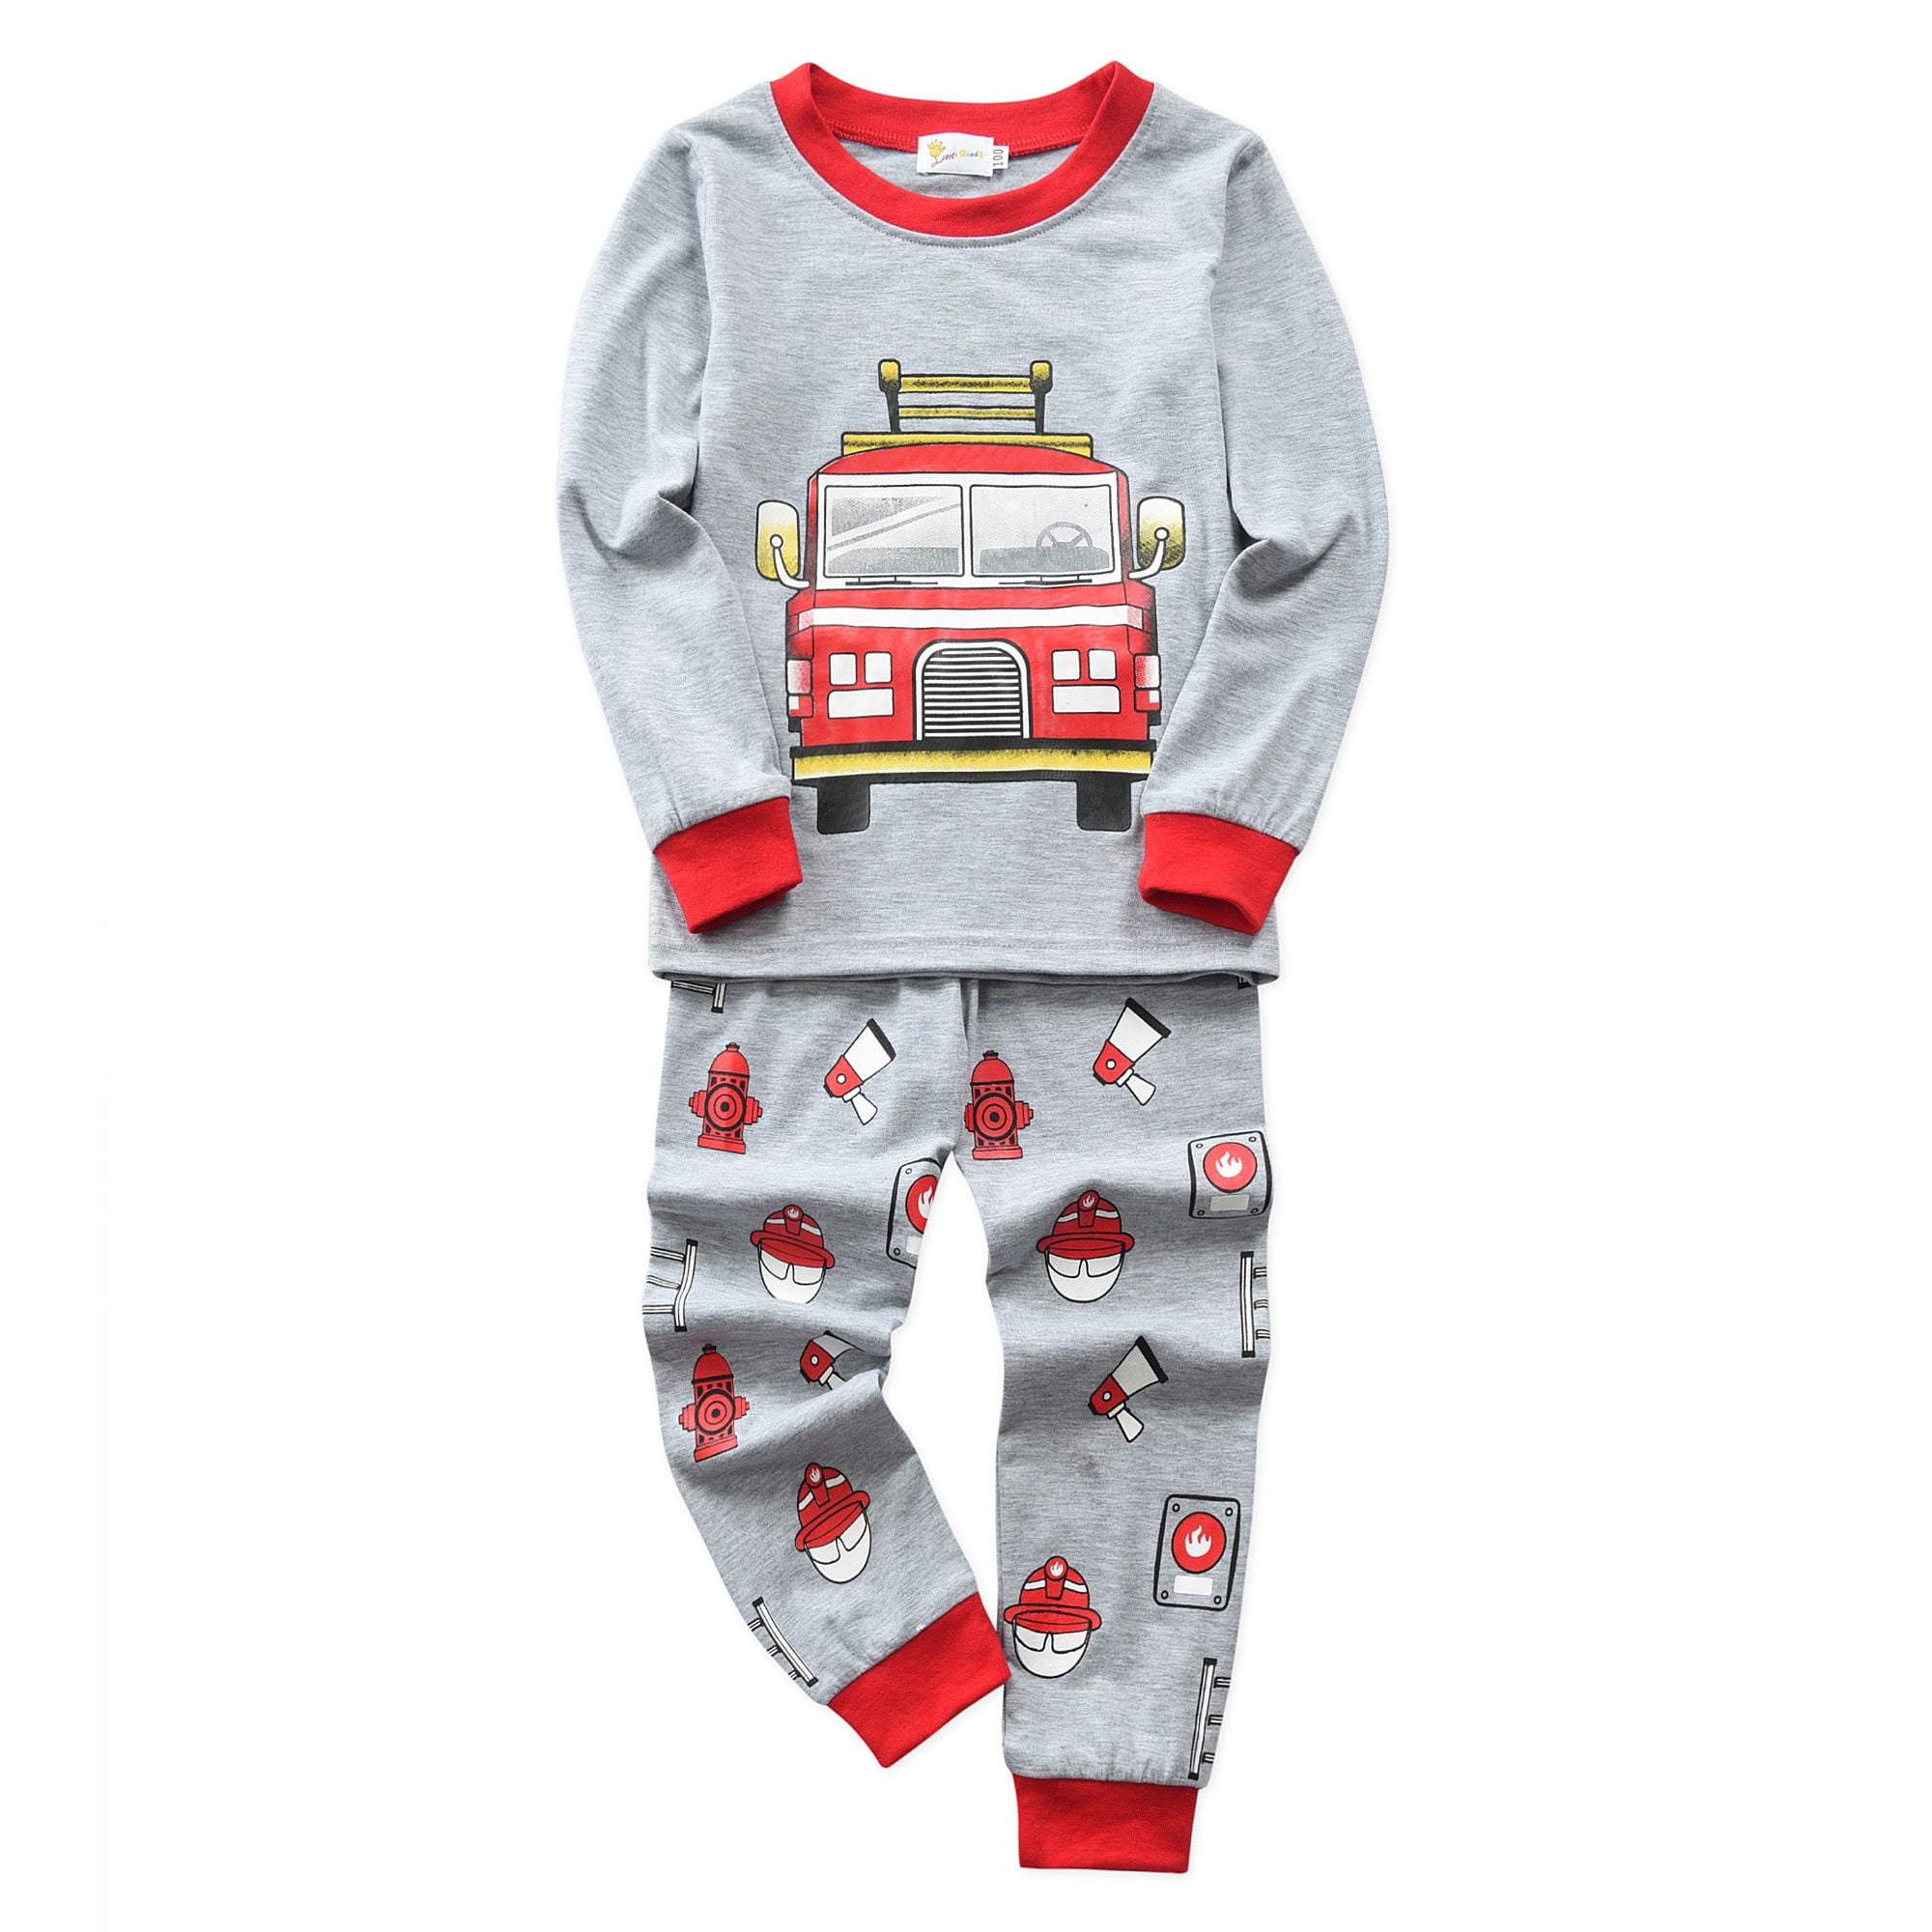 Boys Pajamas Long Sleeve Toddler Clothes Set Dinosaur 100% Cotton Little Kids Pjs Sleepwear